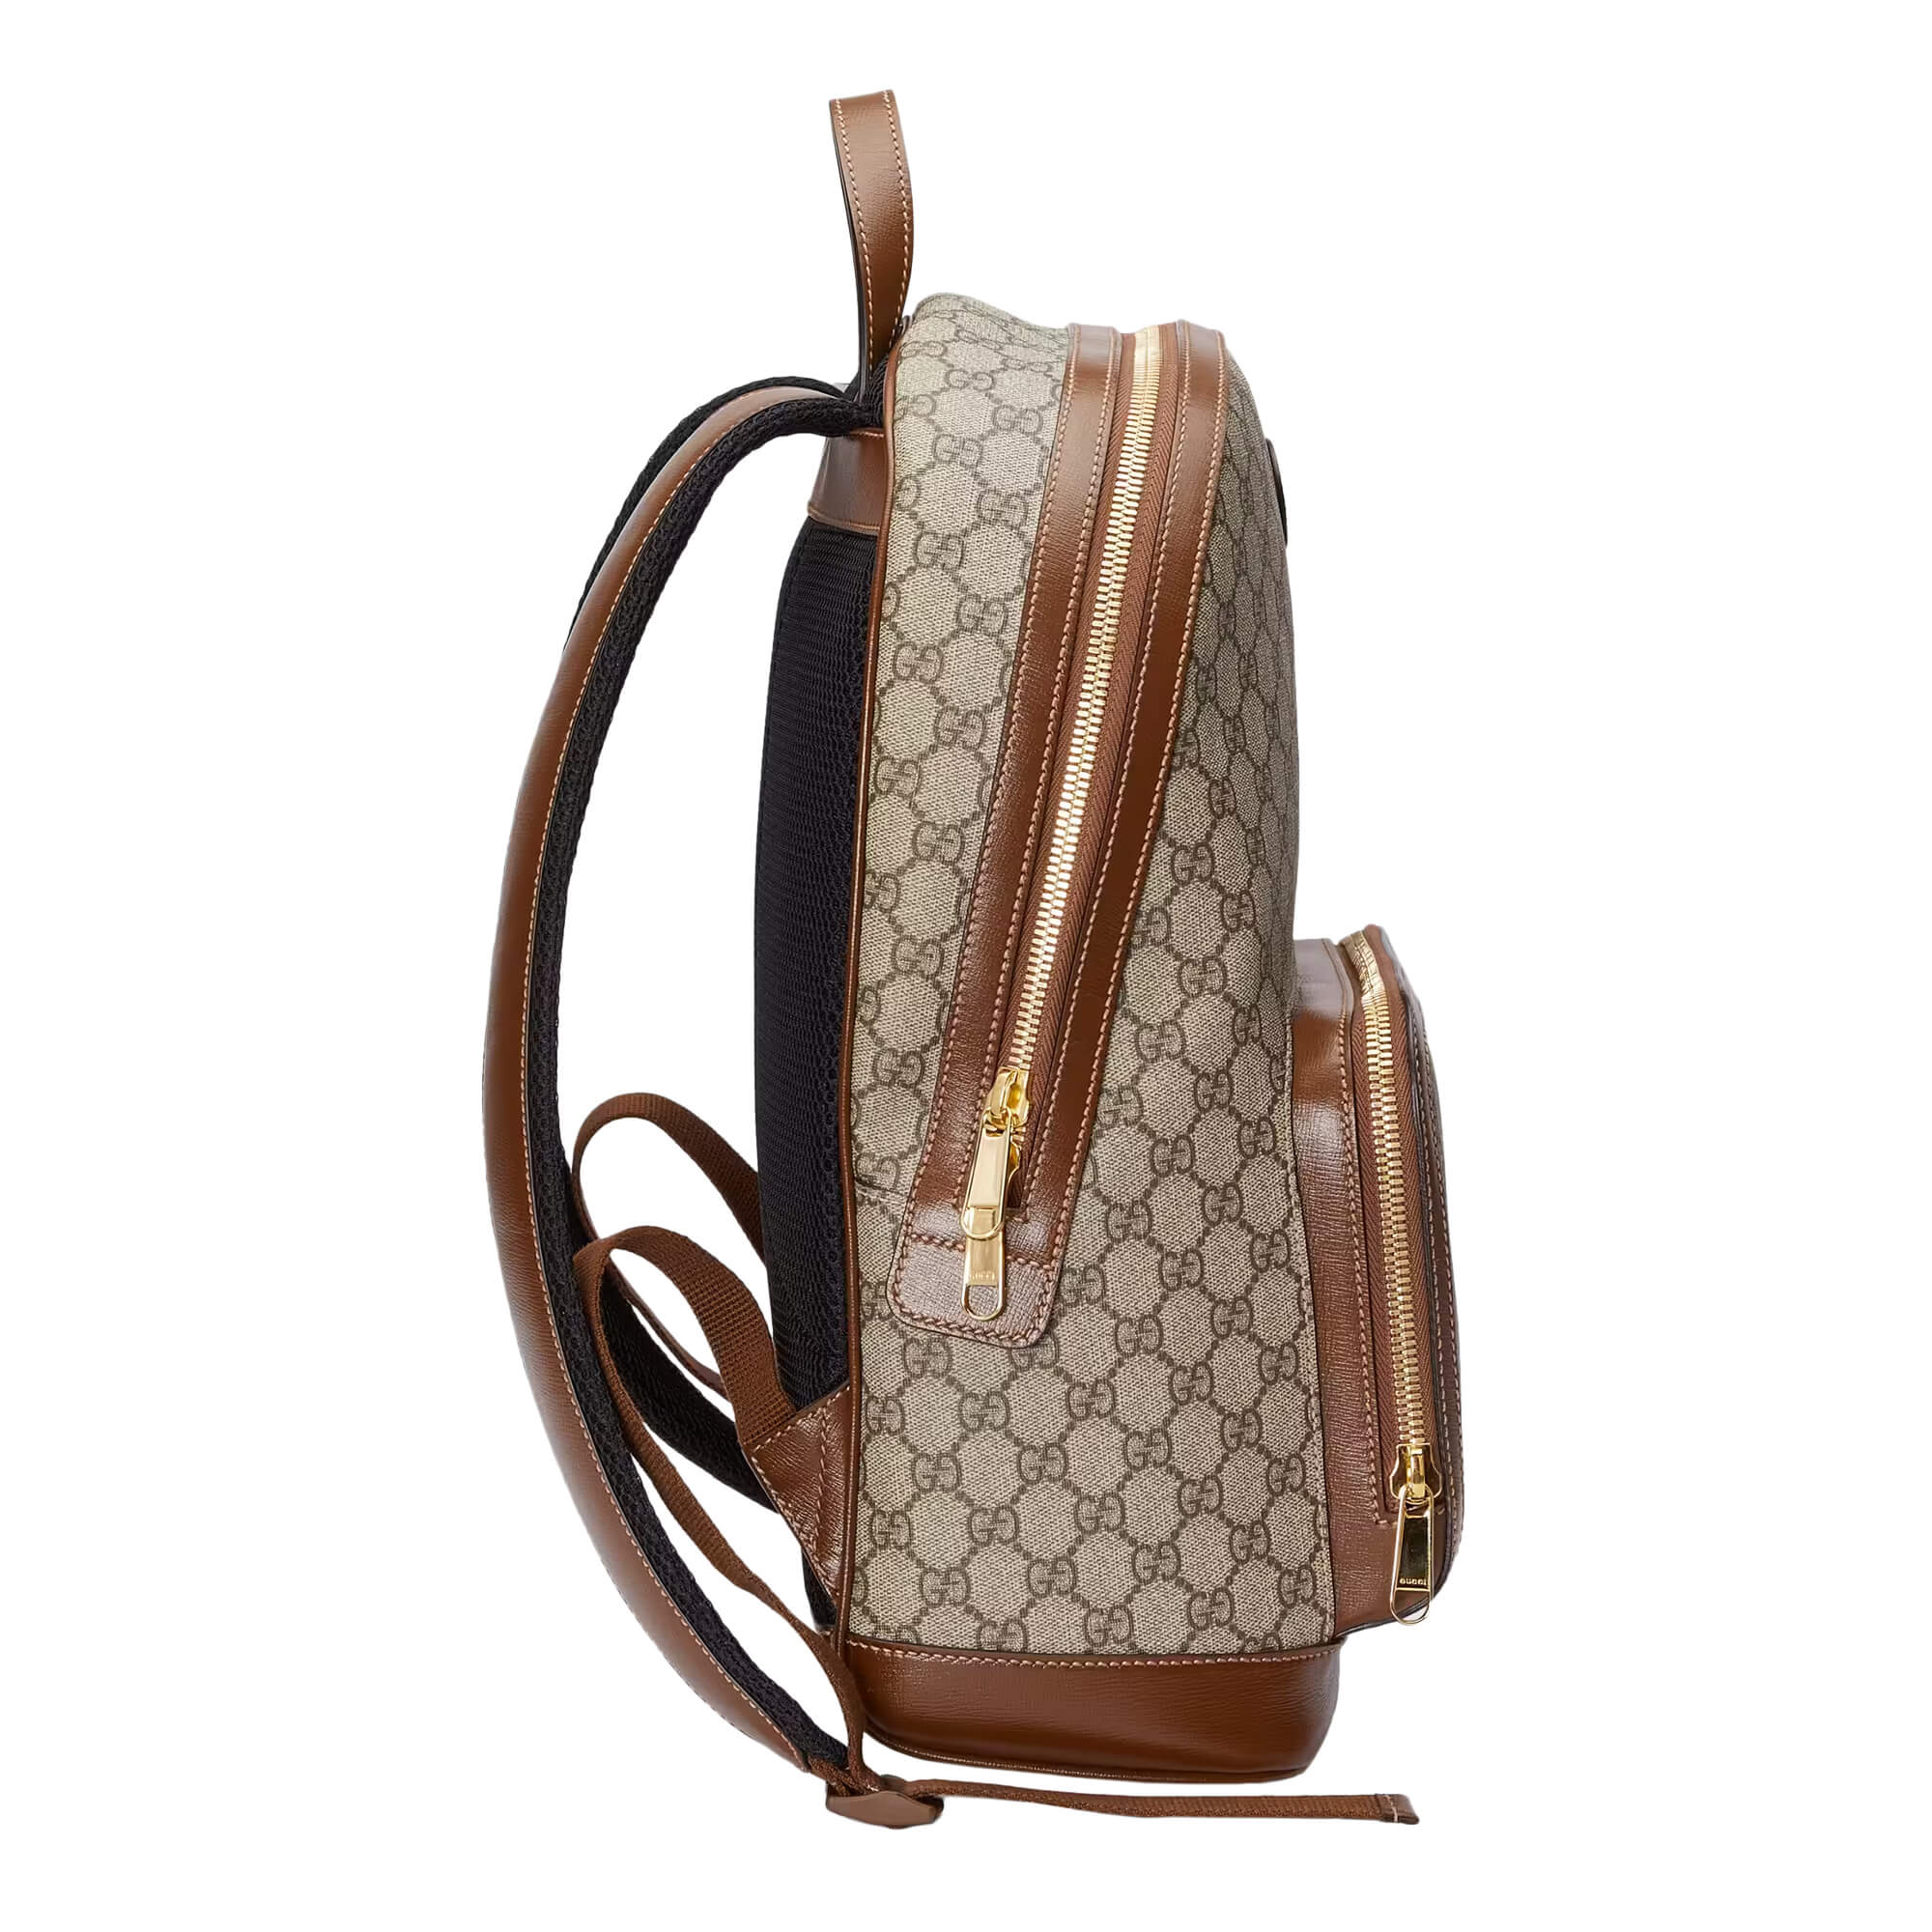 White Guccissima Leather Padlock Backpack Bag - VIRGIL ABLOH X IKEA  MARKERAD MEDIUM BAG BROWN - HotelomegaShops